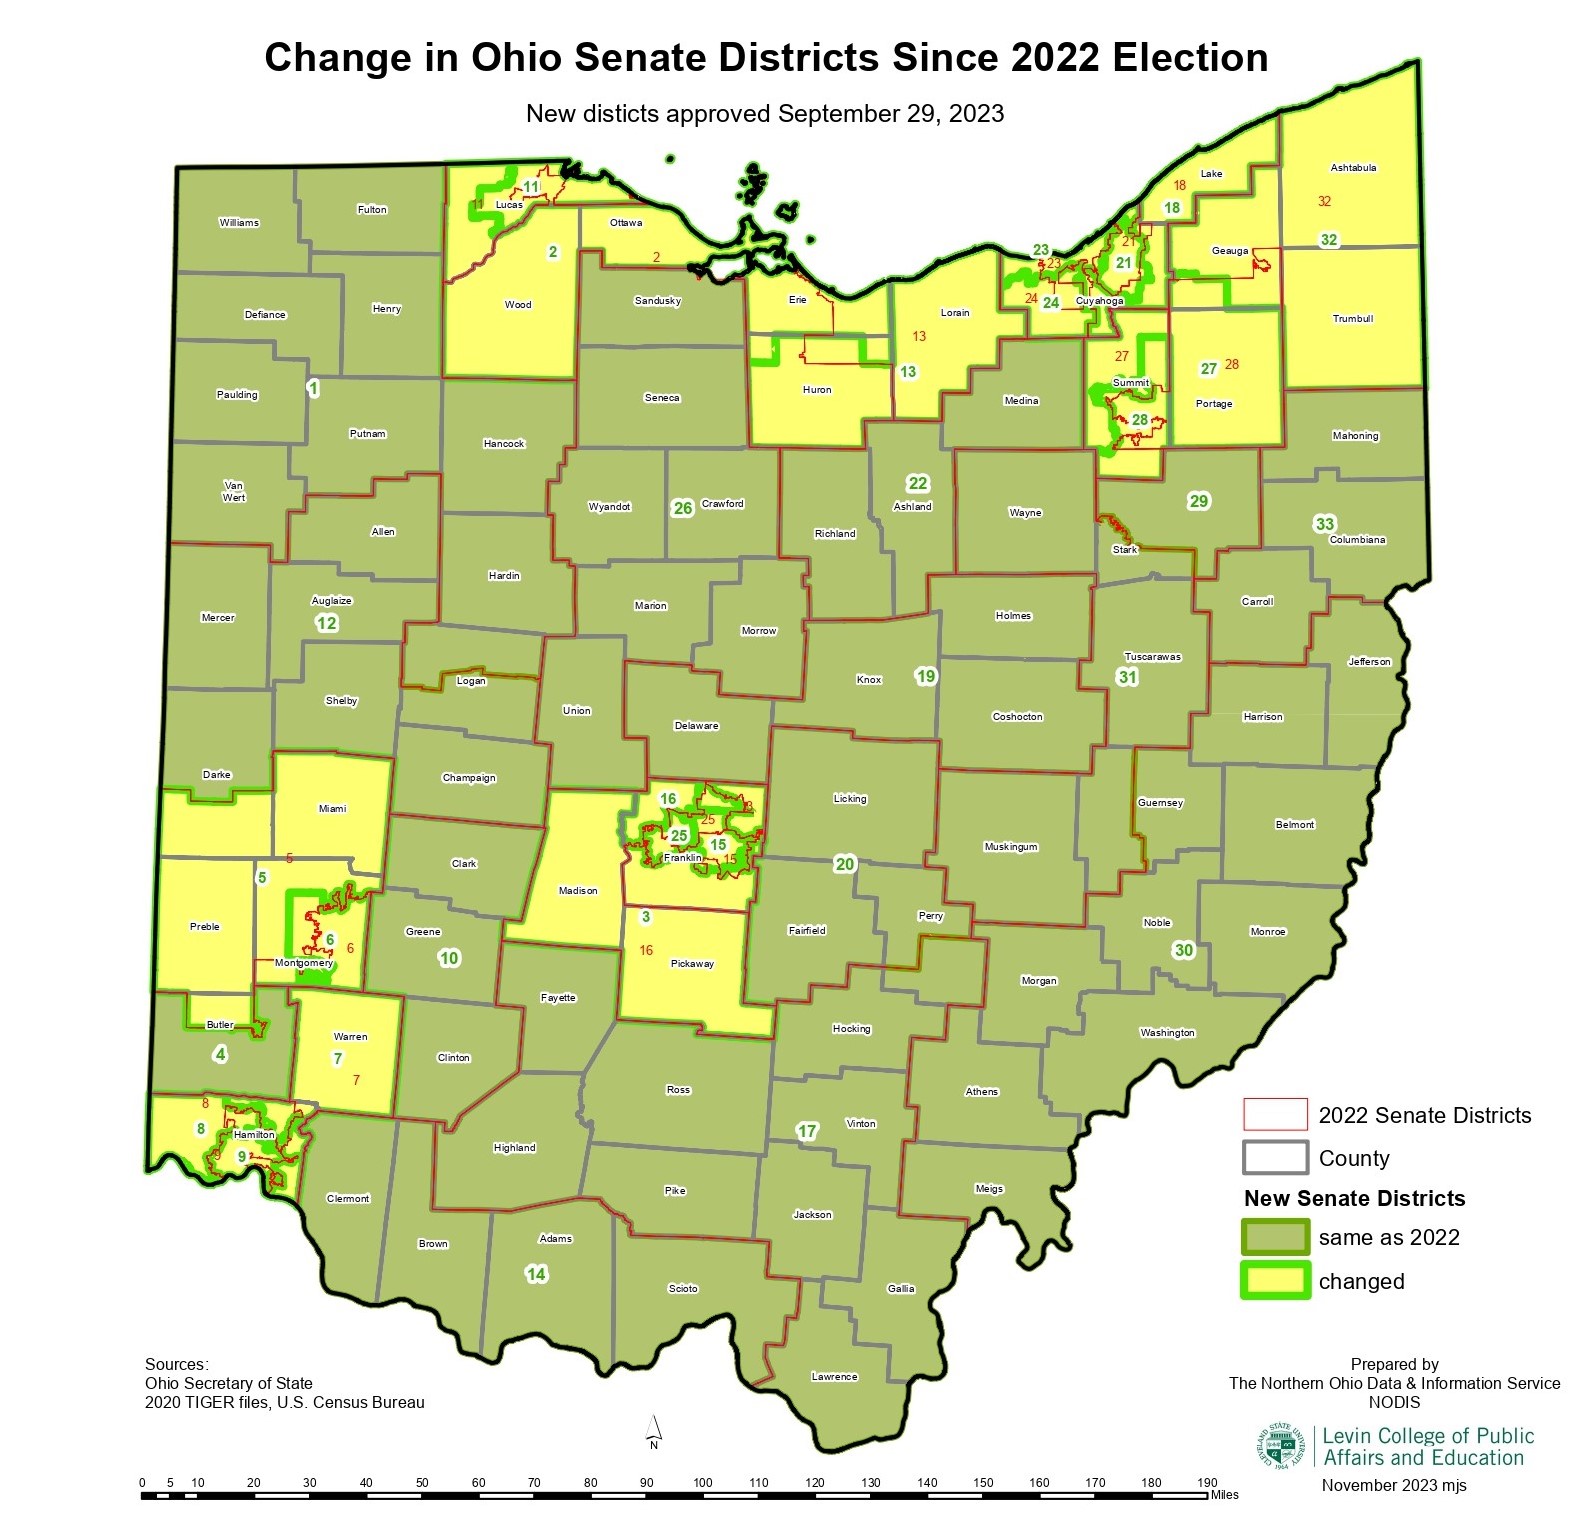 Ohio-Senate-Districts-Change-Since-2022-tabloid_page-0001